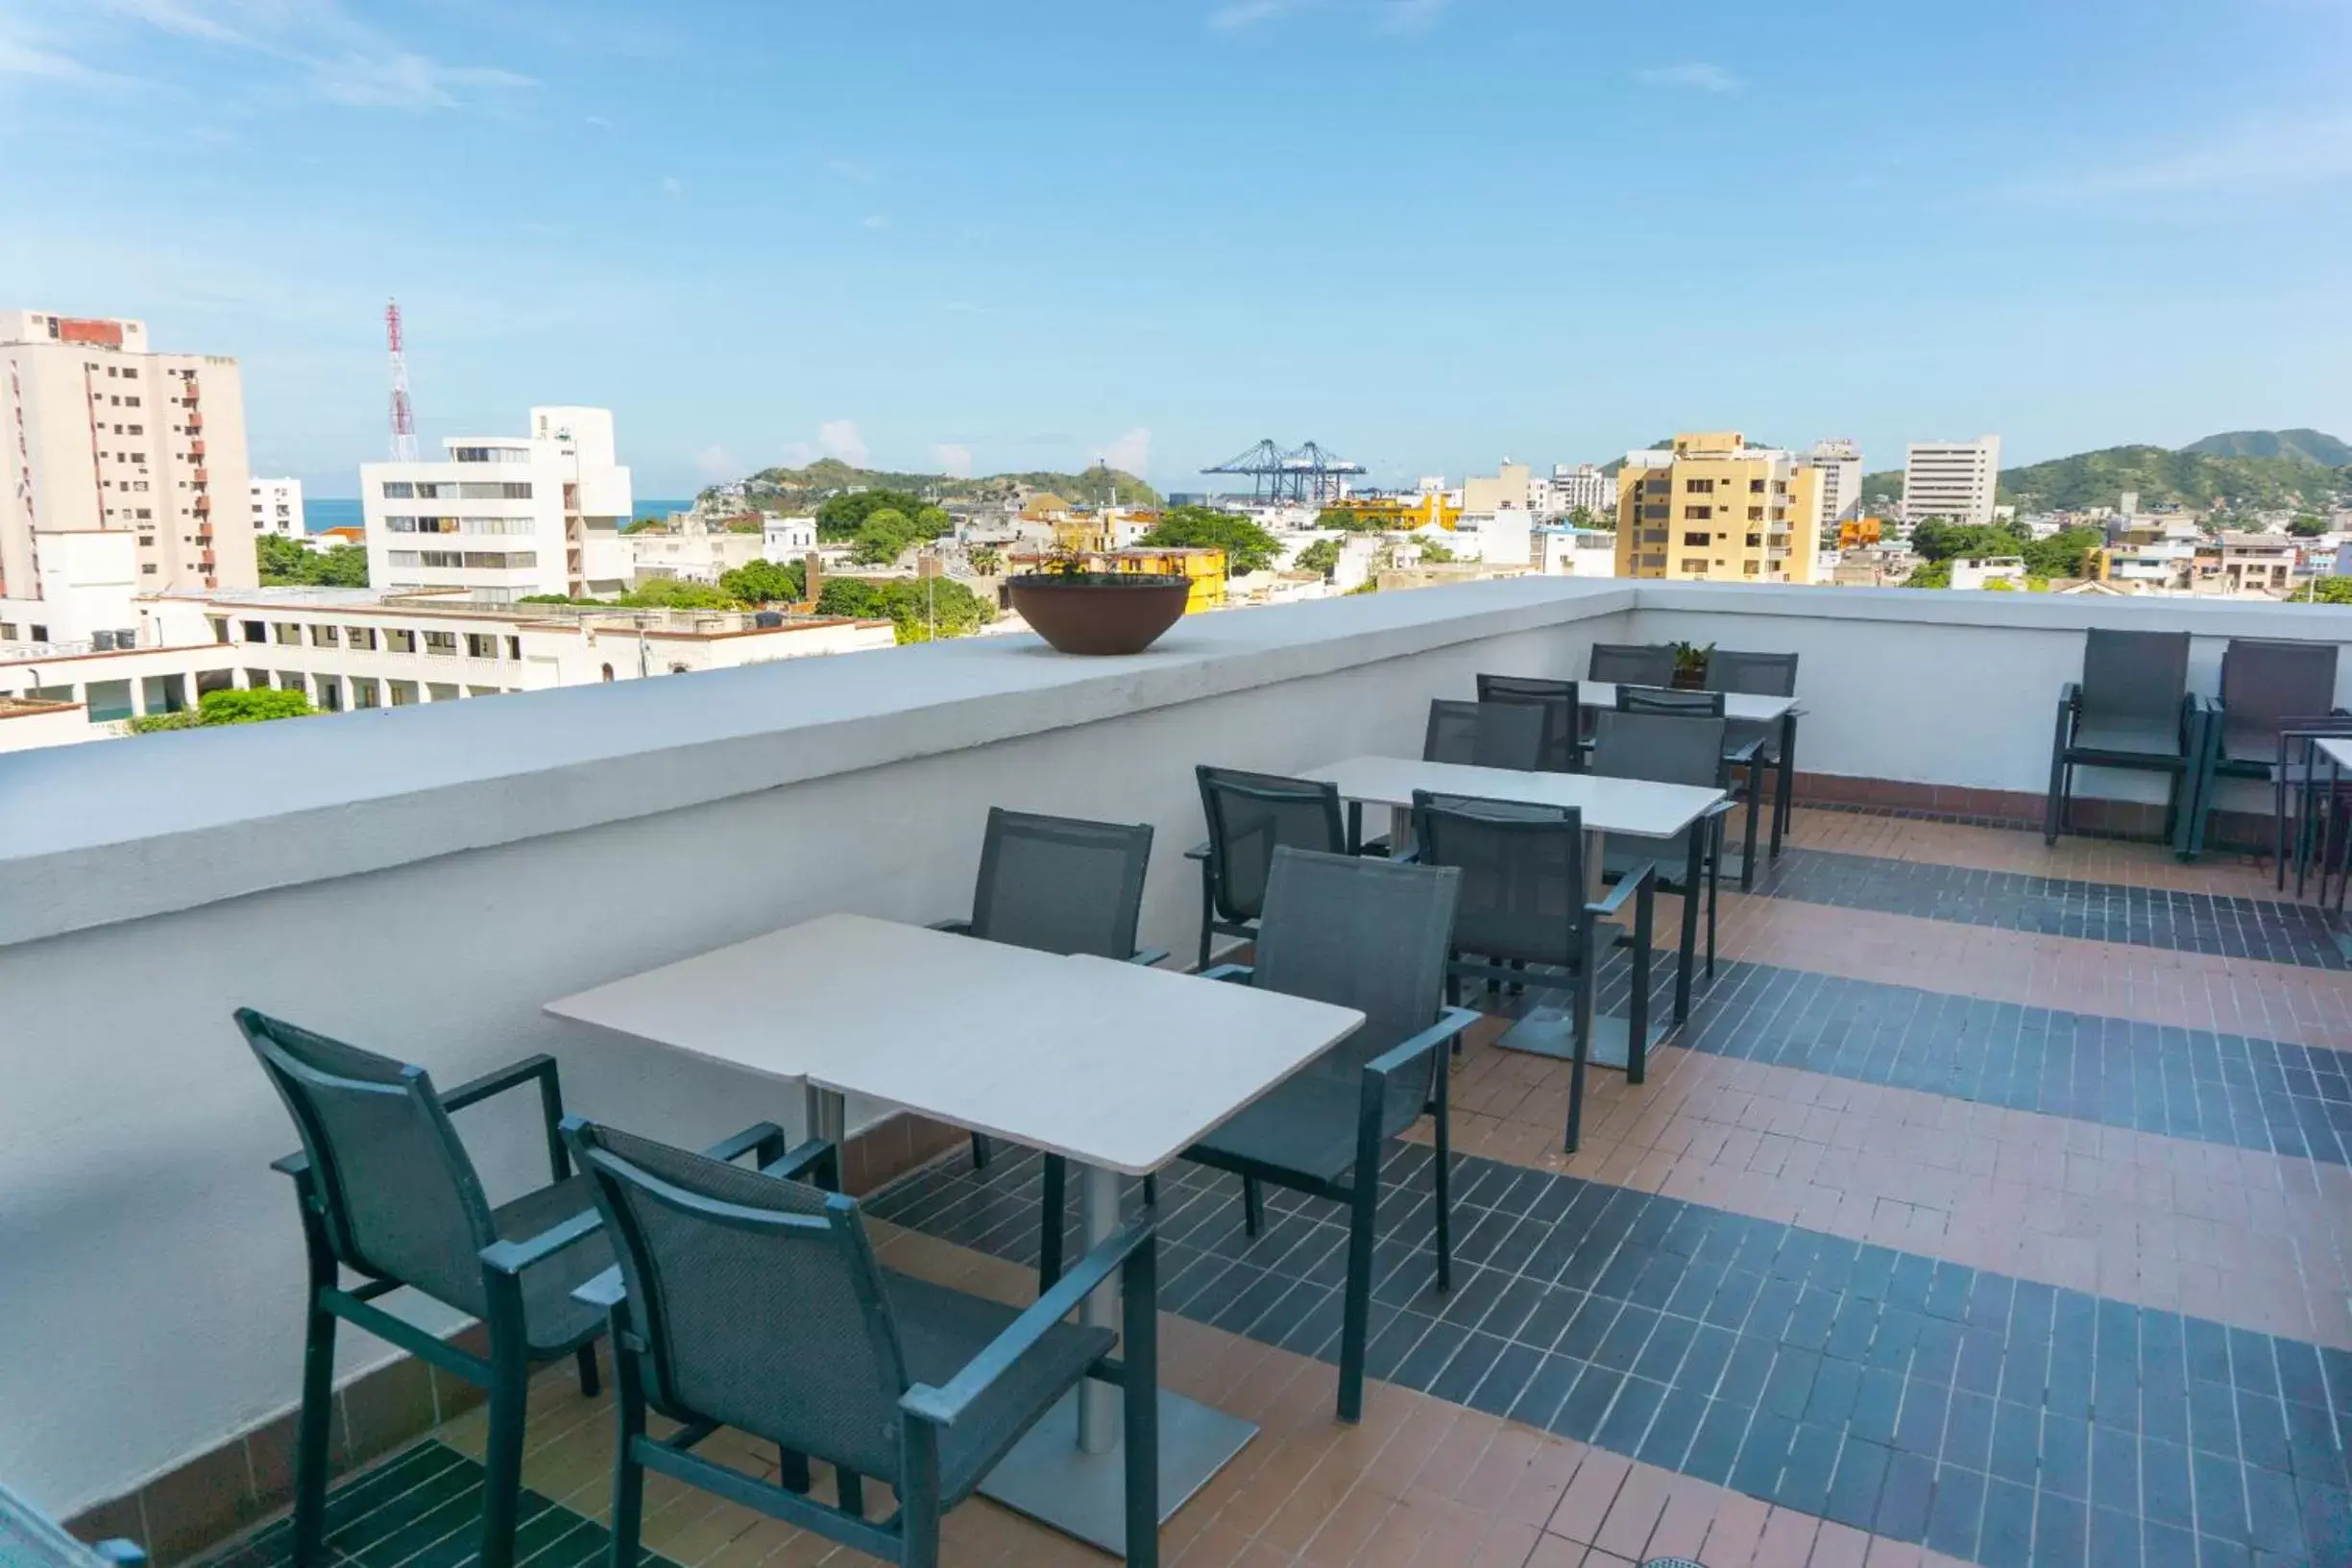 Balcony/Terrace, Restaurant/Places to Eat in Best Western Plus Santa Marta Hotel